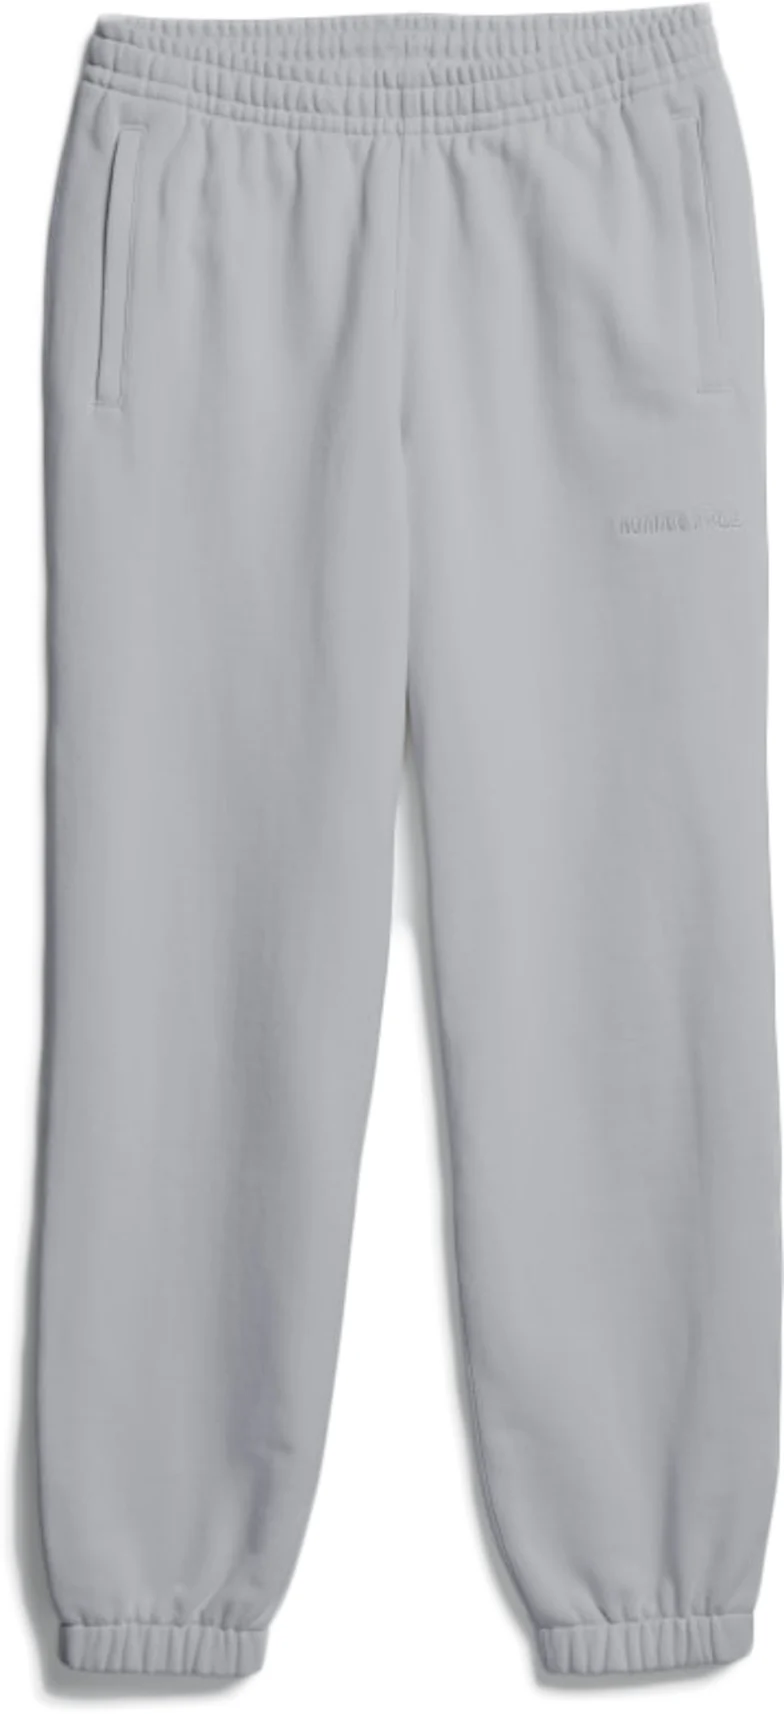 adidas Pharrell Williams Basics Sweat Pants Light Grey Heather